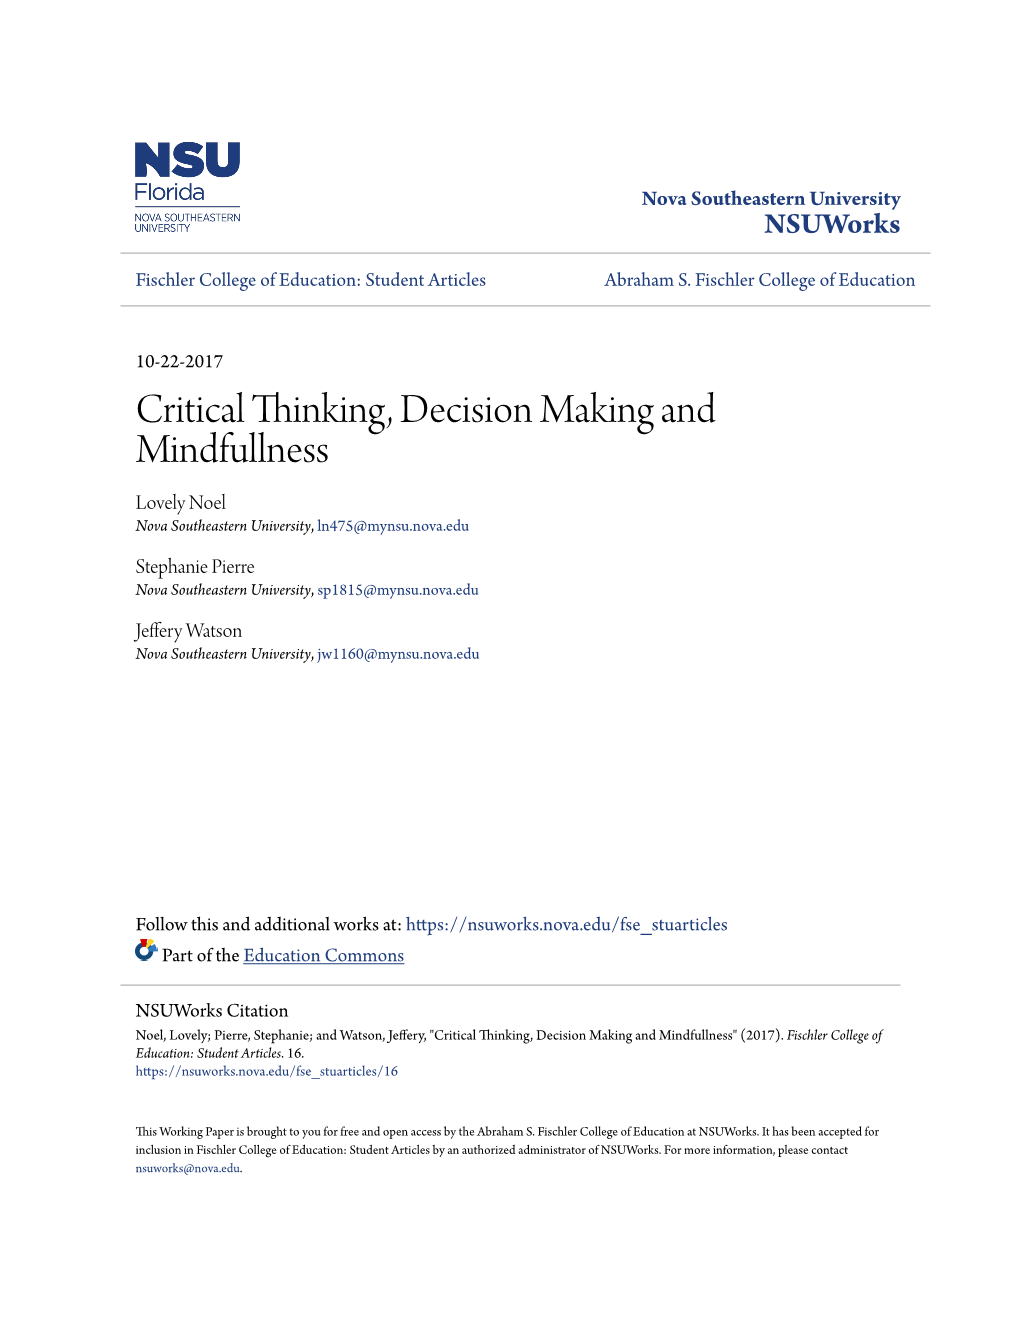 Critical Thinking, Decision Making and Mindfullness Lovely Noel Nova Southeastern University, Ln475@Mynsu.Nova.Edu